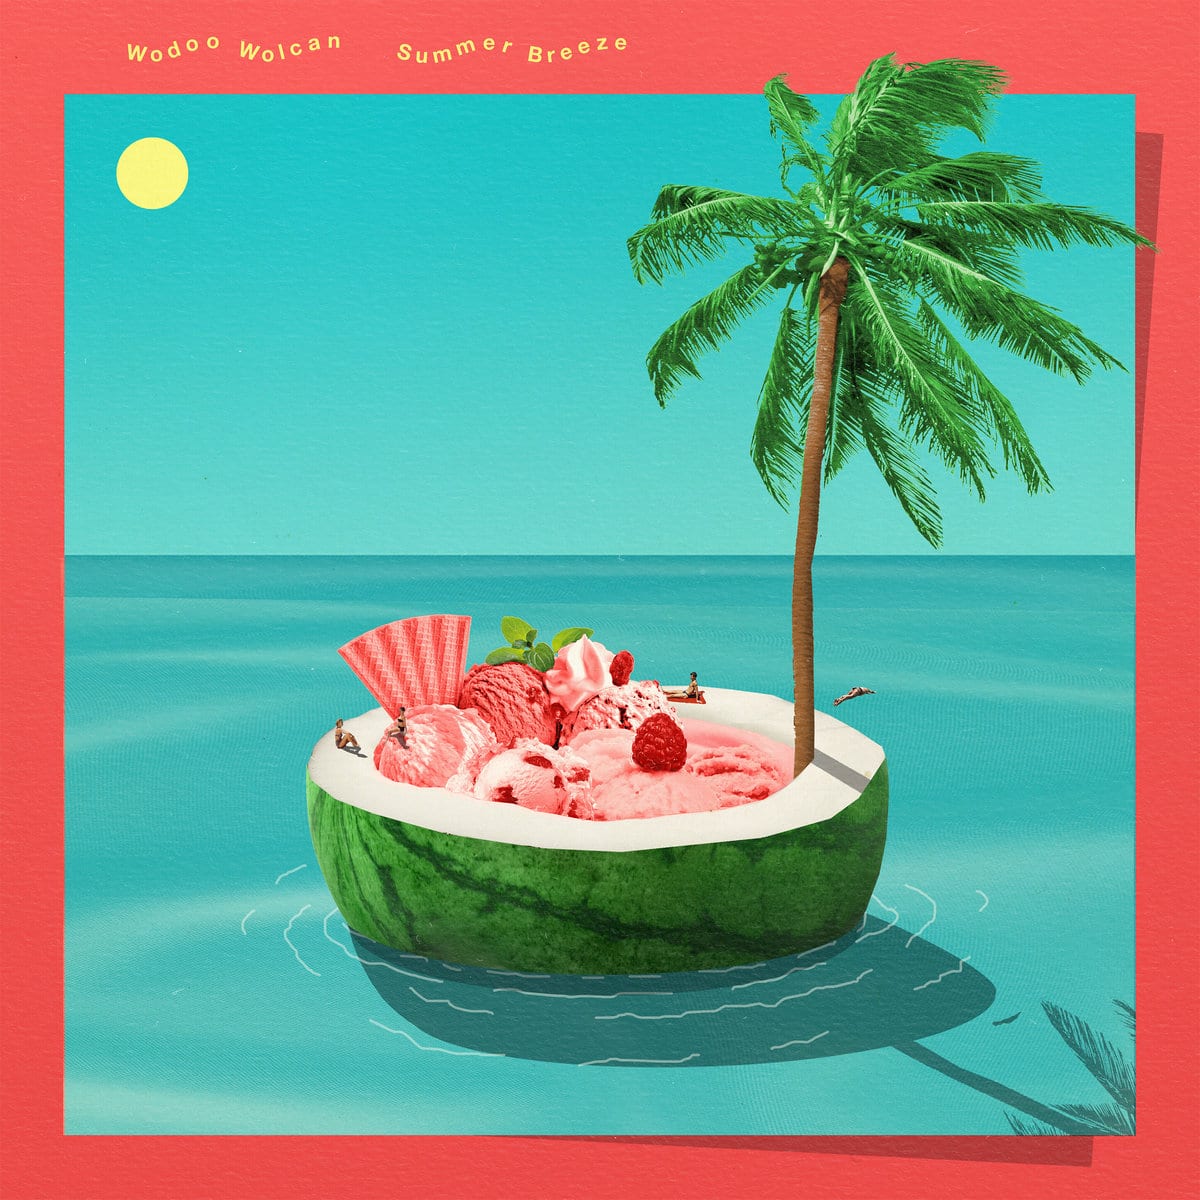 Wodoo Wolcan - "Summer Breeze" (Release)